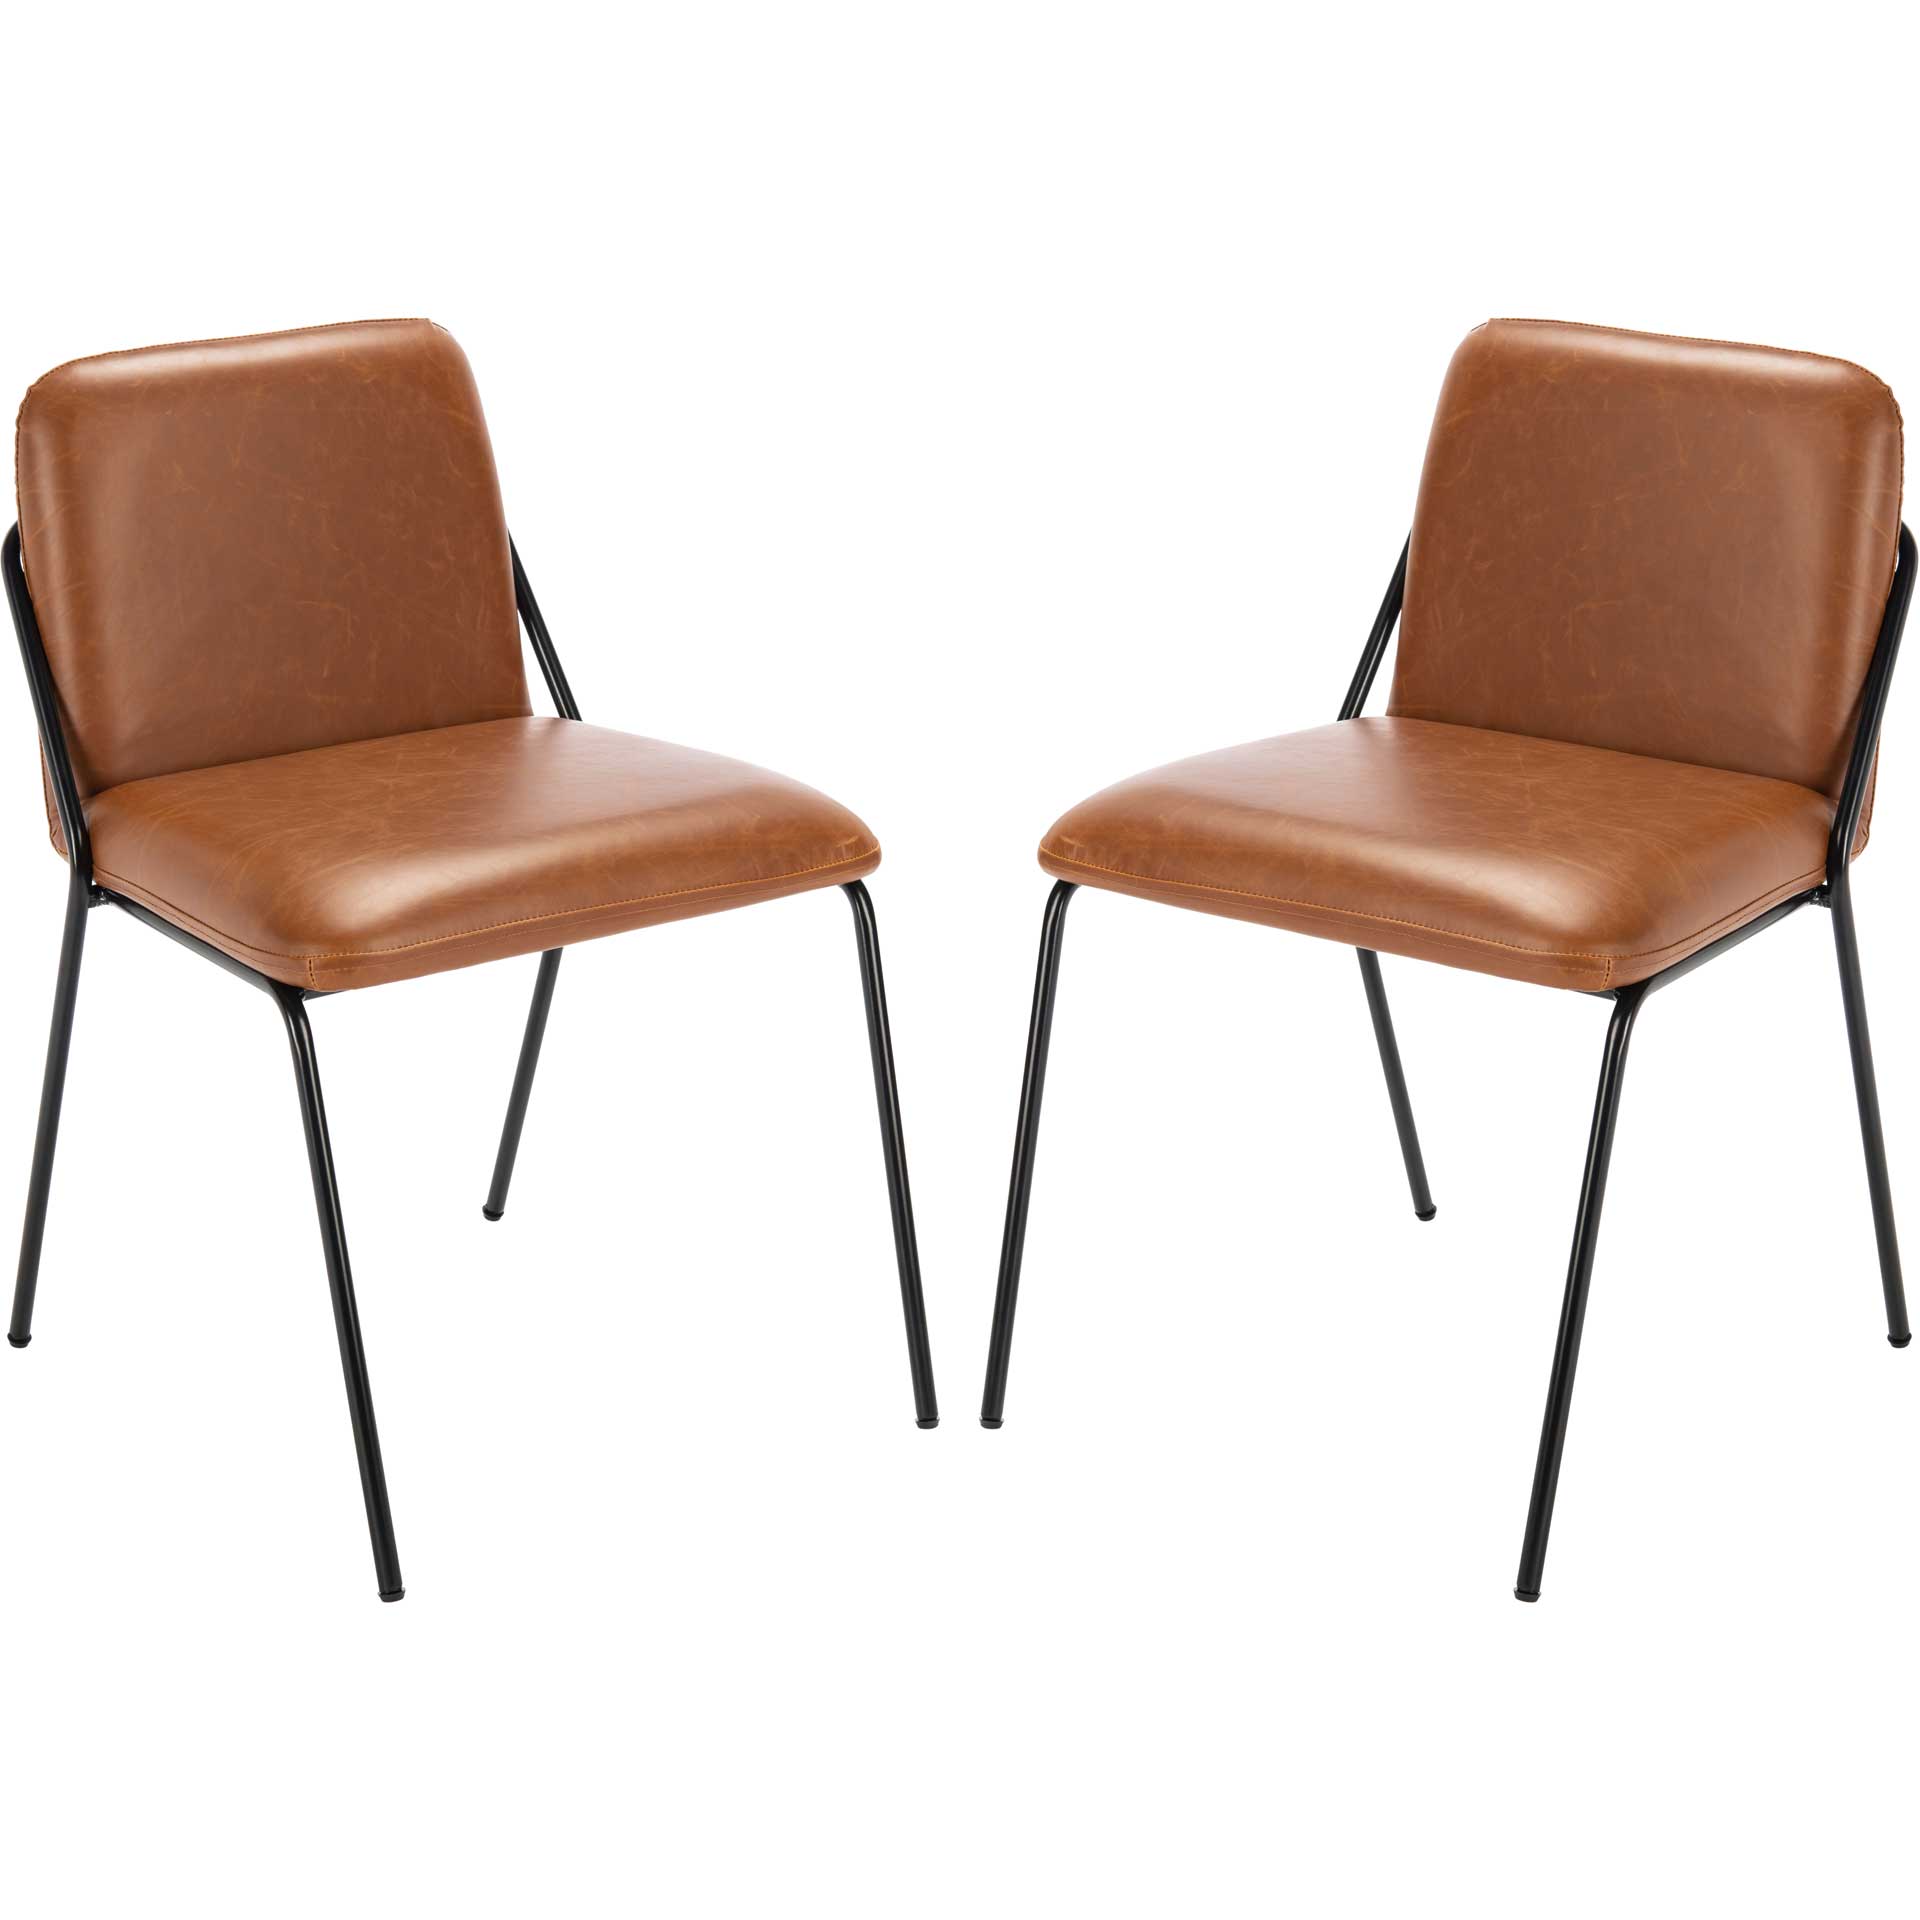 Tahlia Side Chair Light Brown/Matte Black (Set of 2)